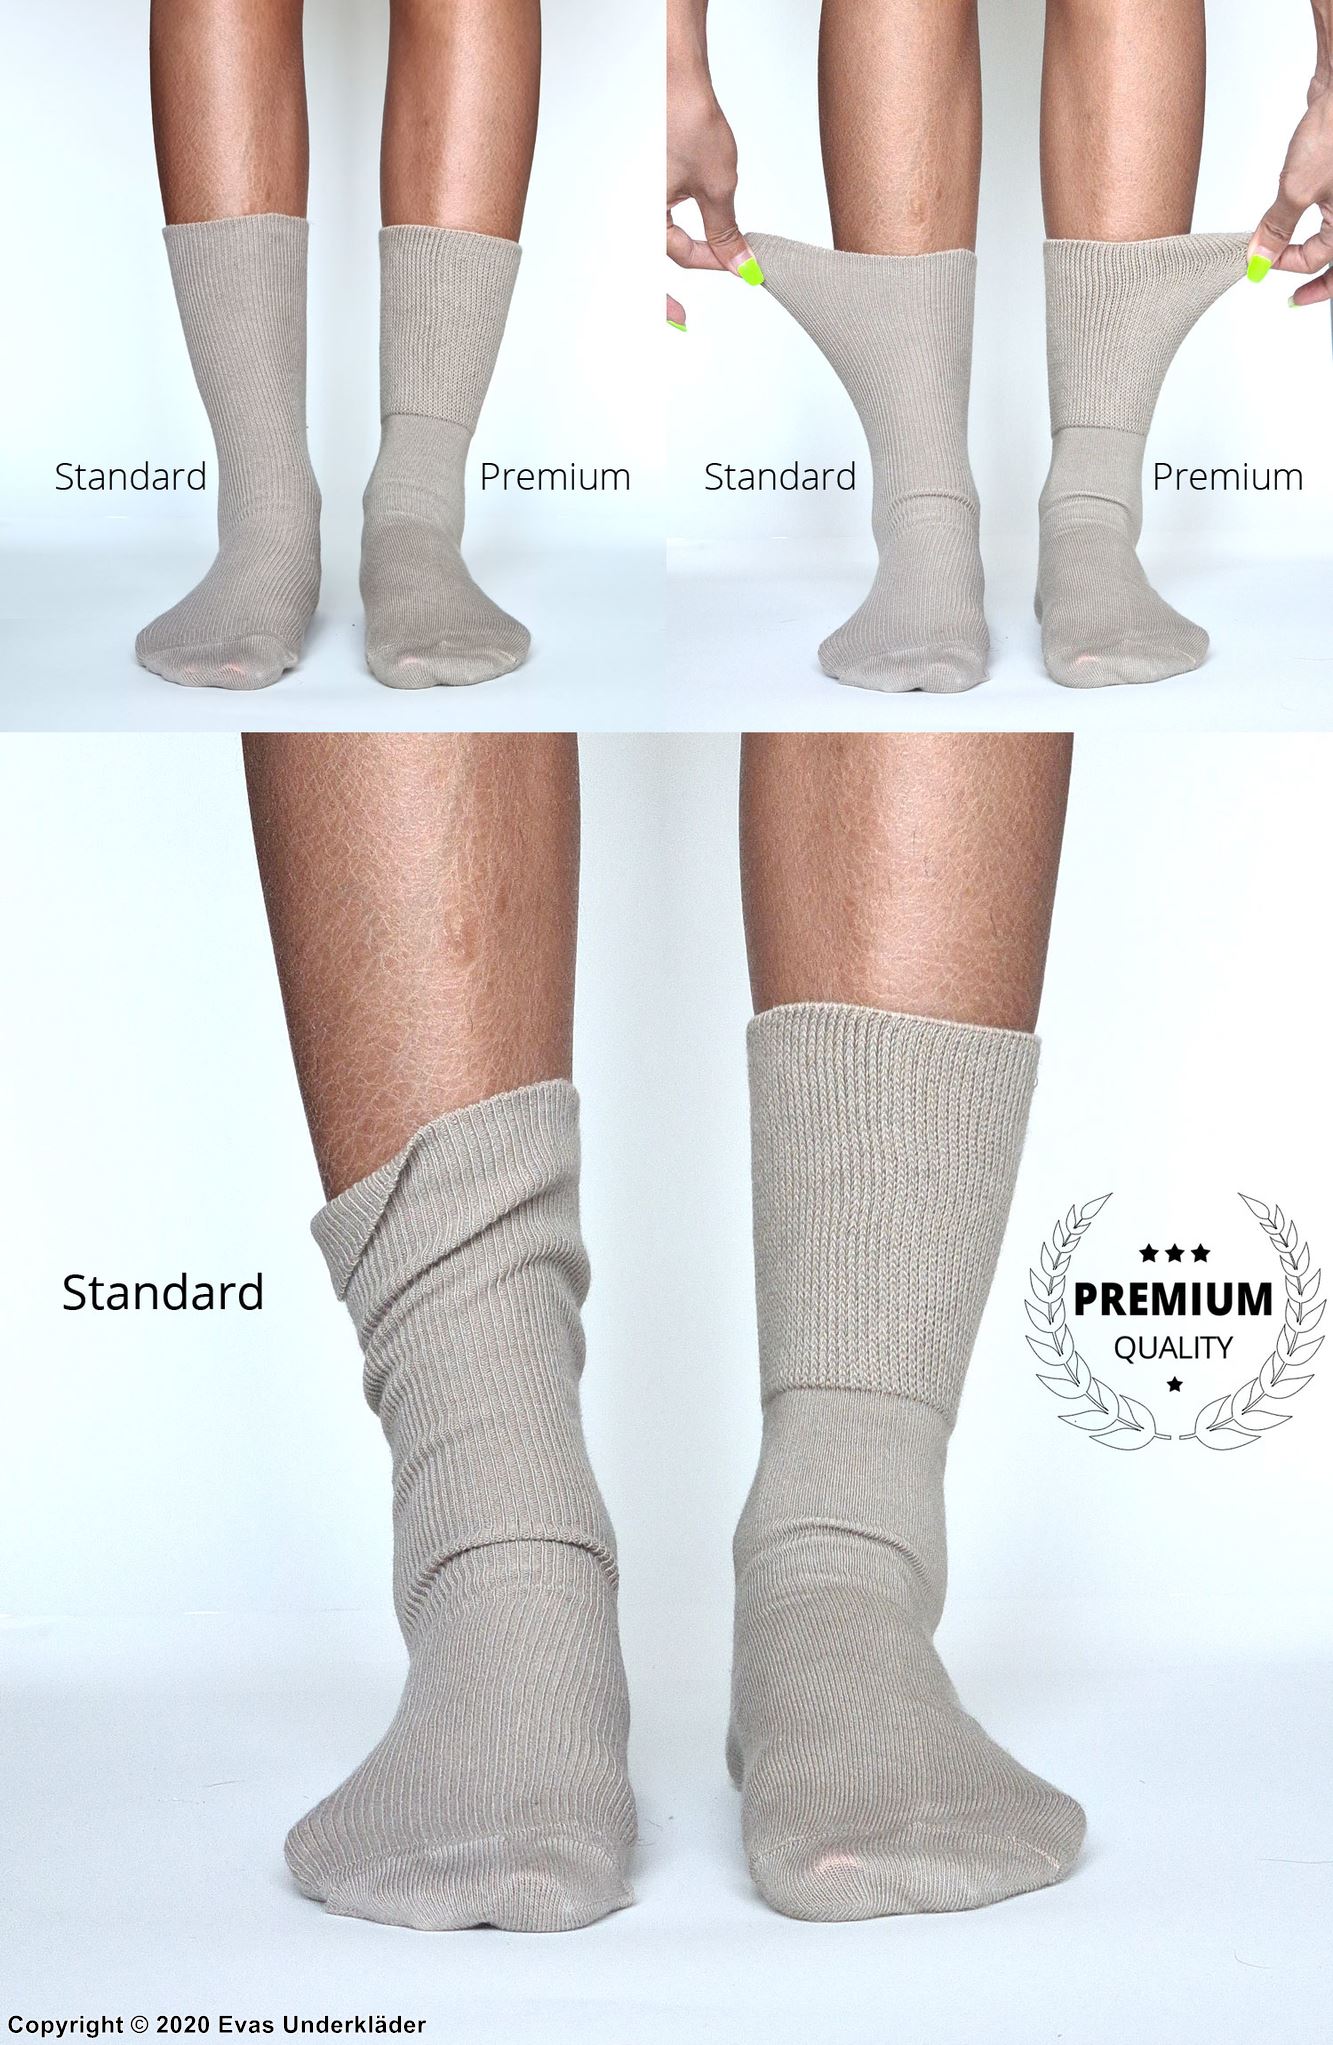 Comfort socks (unisex), cotton, non-restrictive cuffs, flat seam, 5-pack